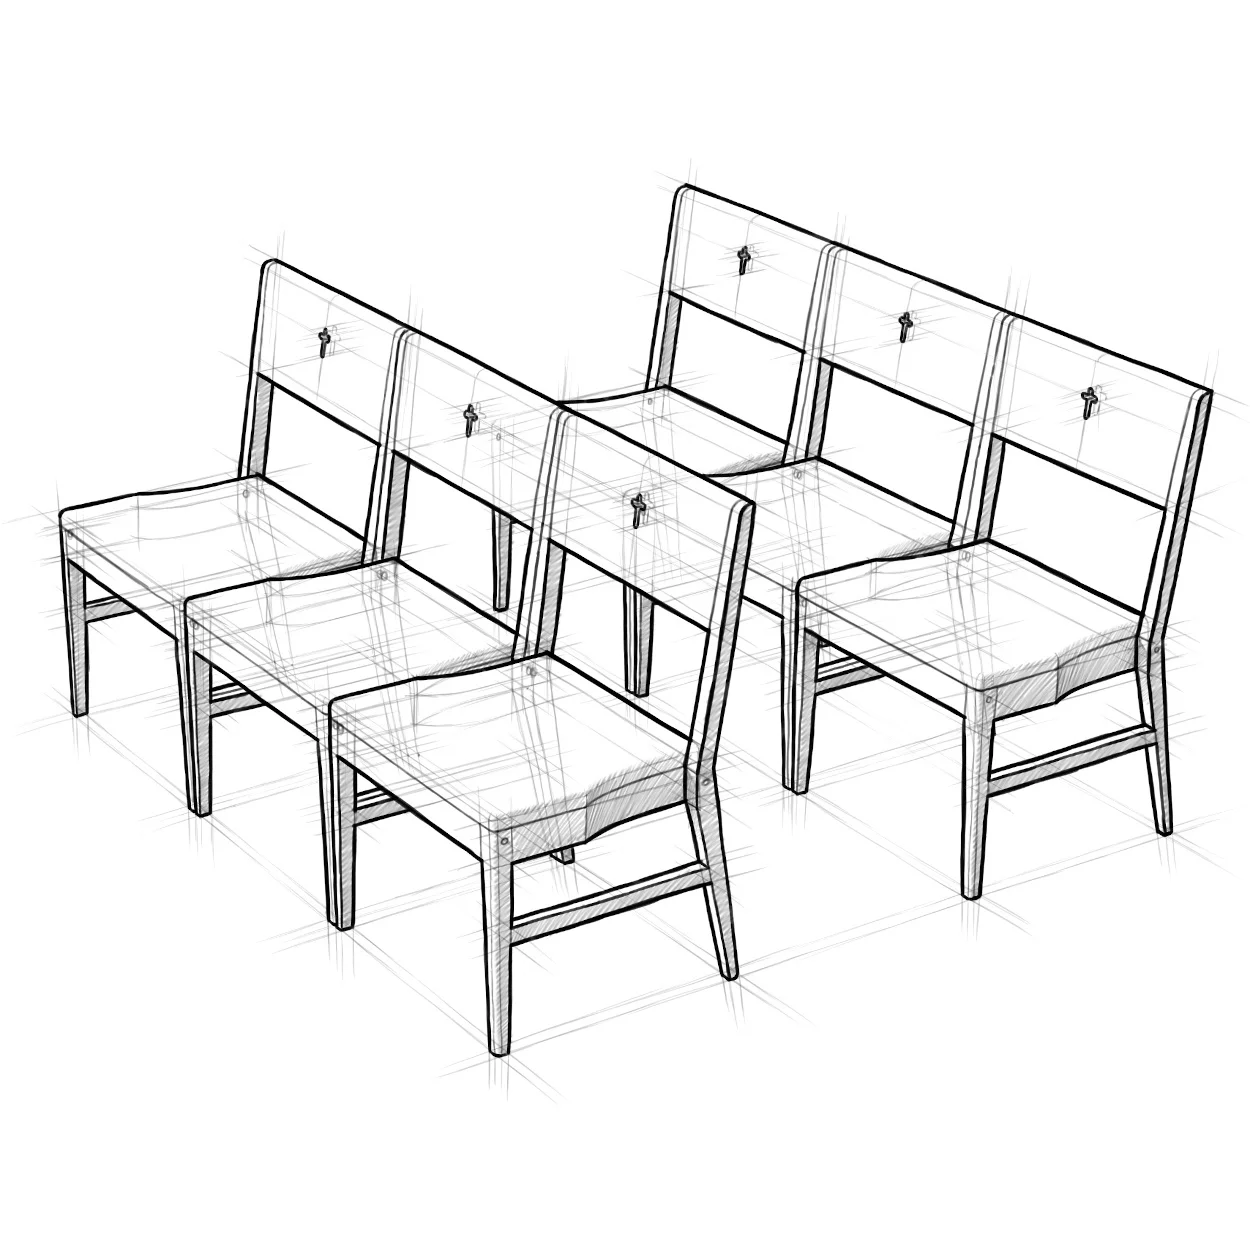 ZOE church chairs